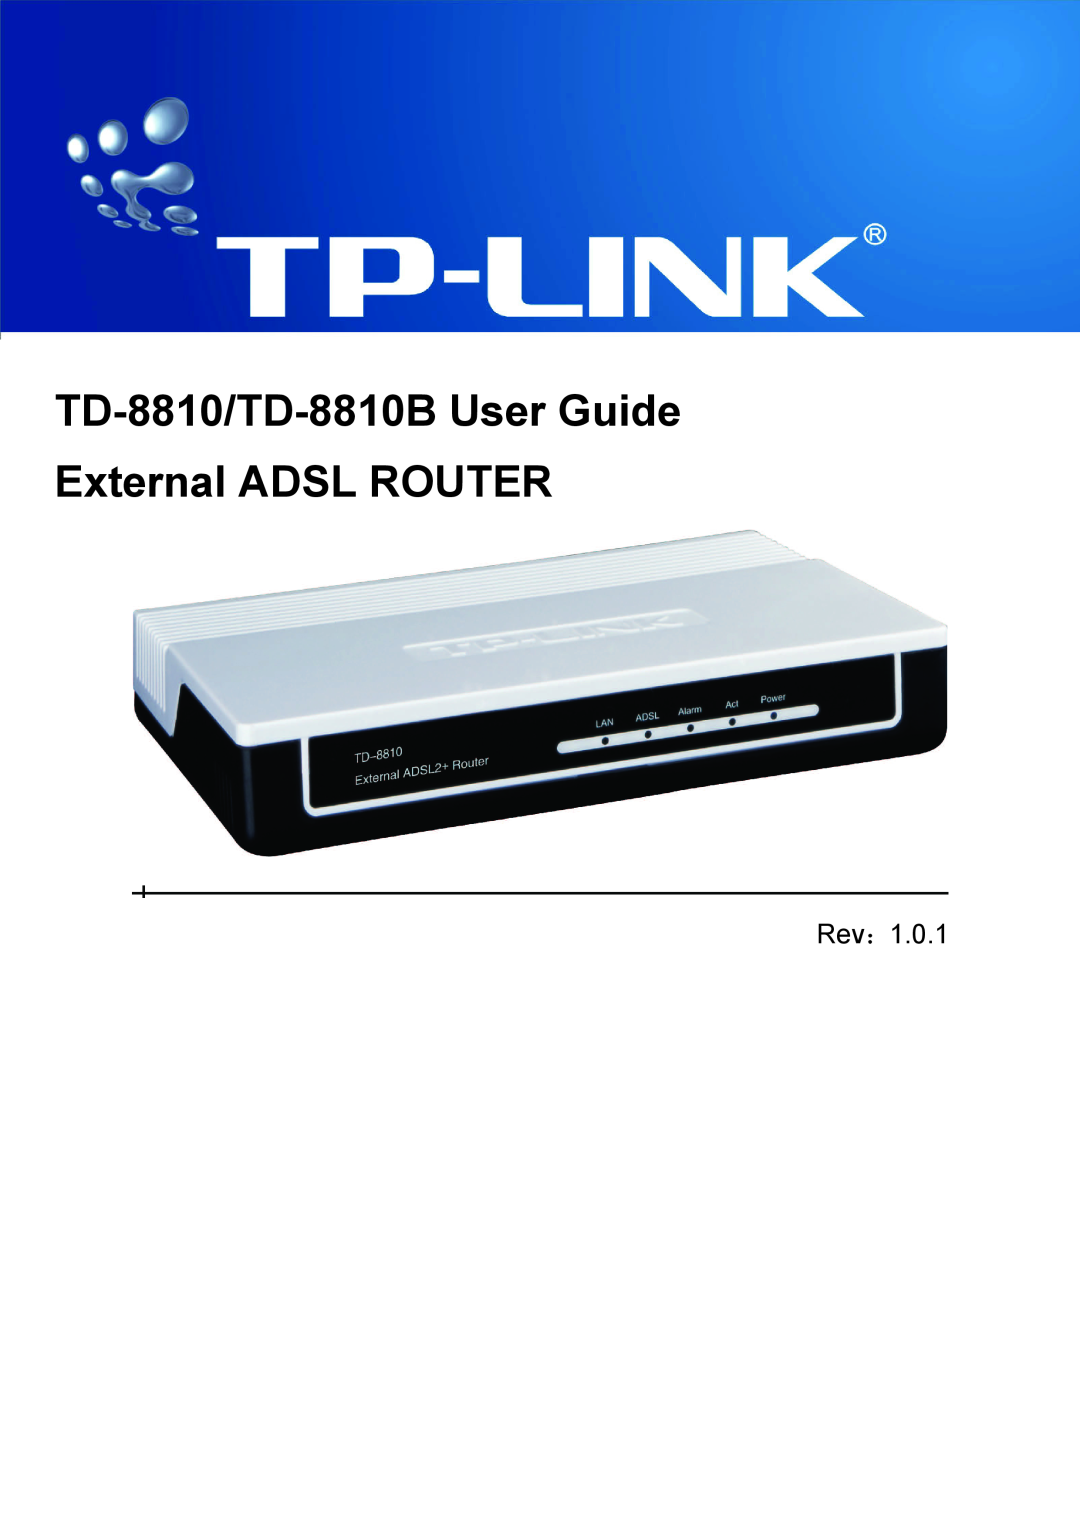 TP-Link manual TD-8810/TD-8810B User Guide External ADSL ROUTER, Rev：1.0.1 